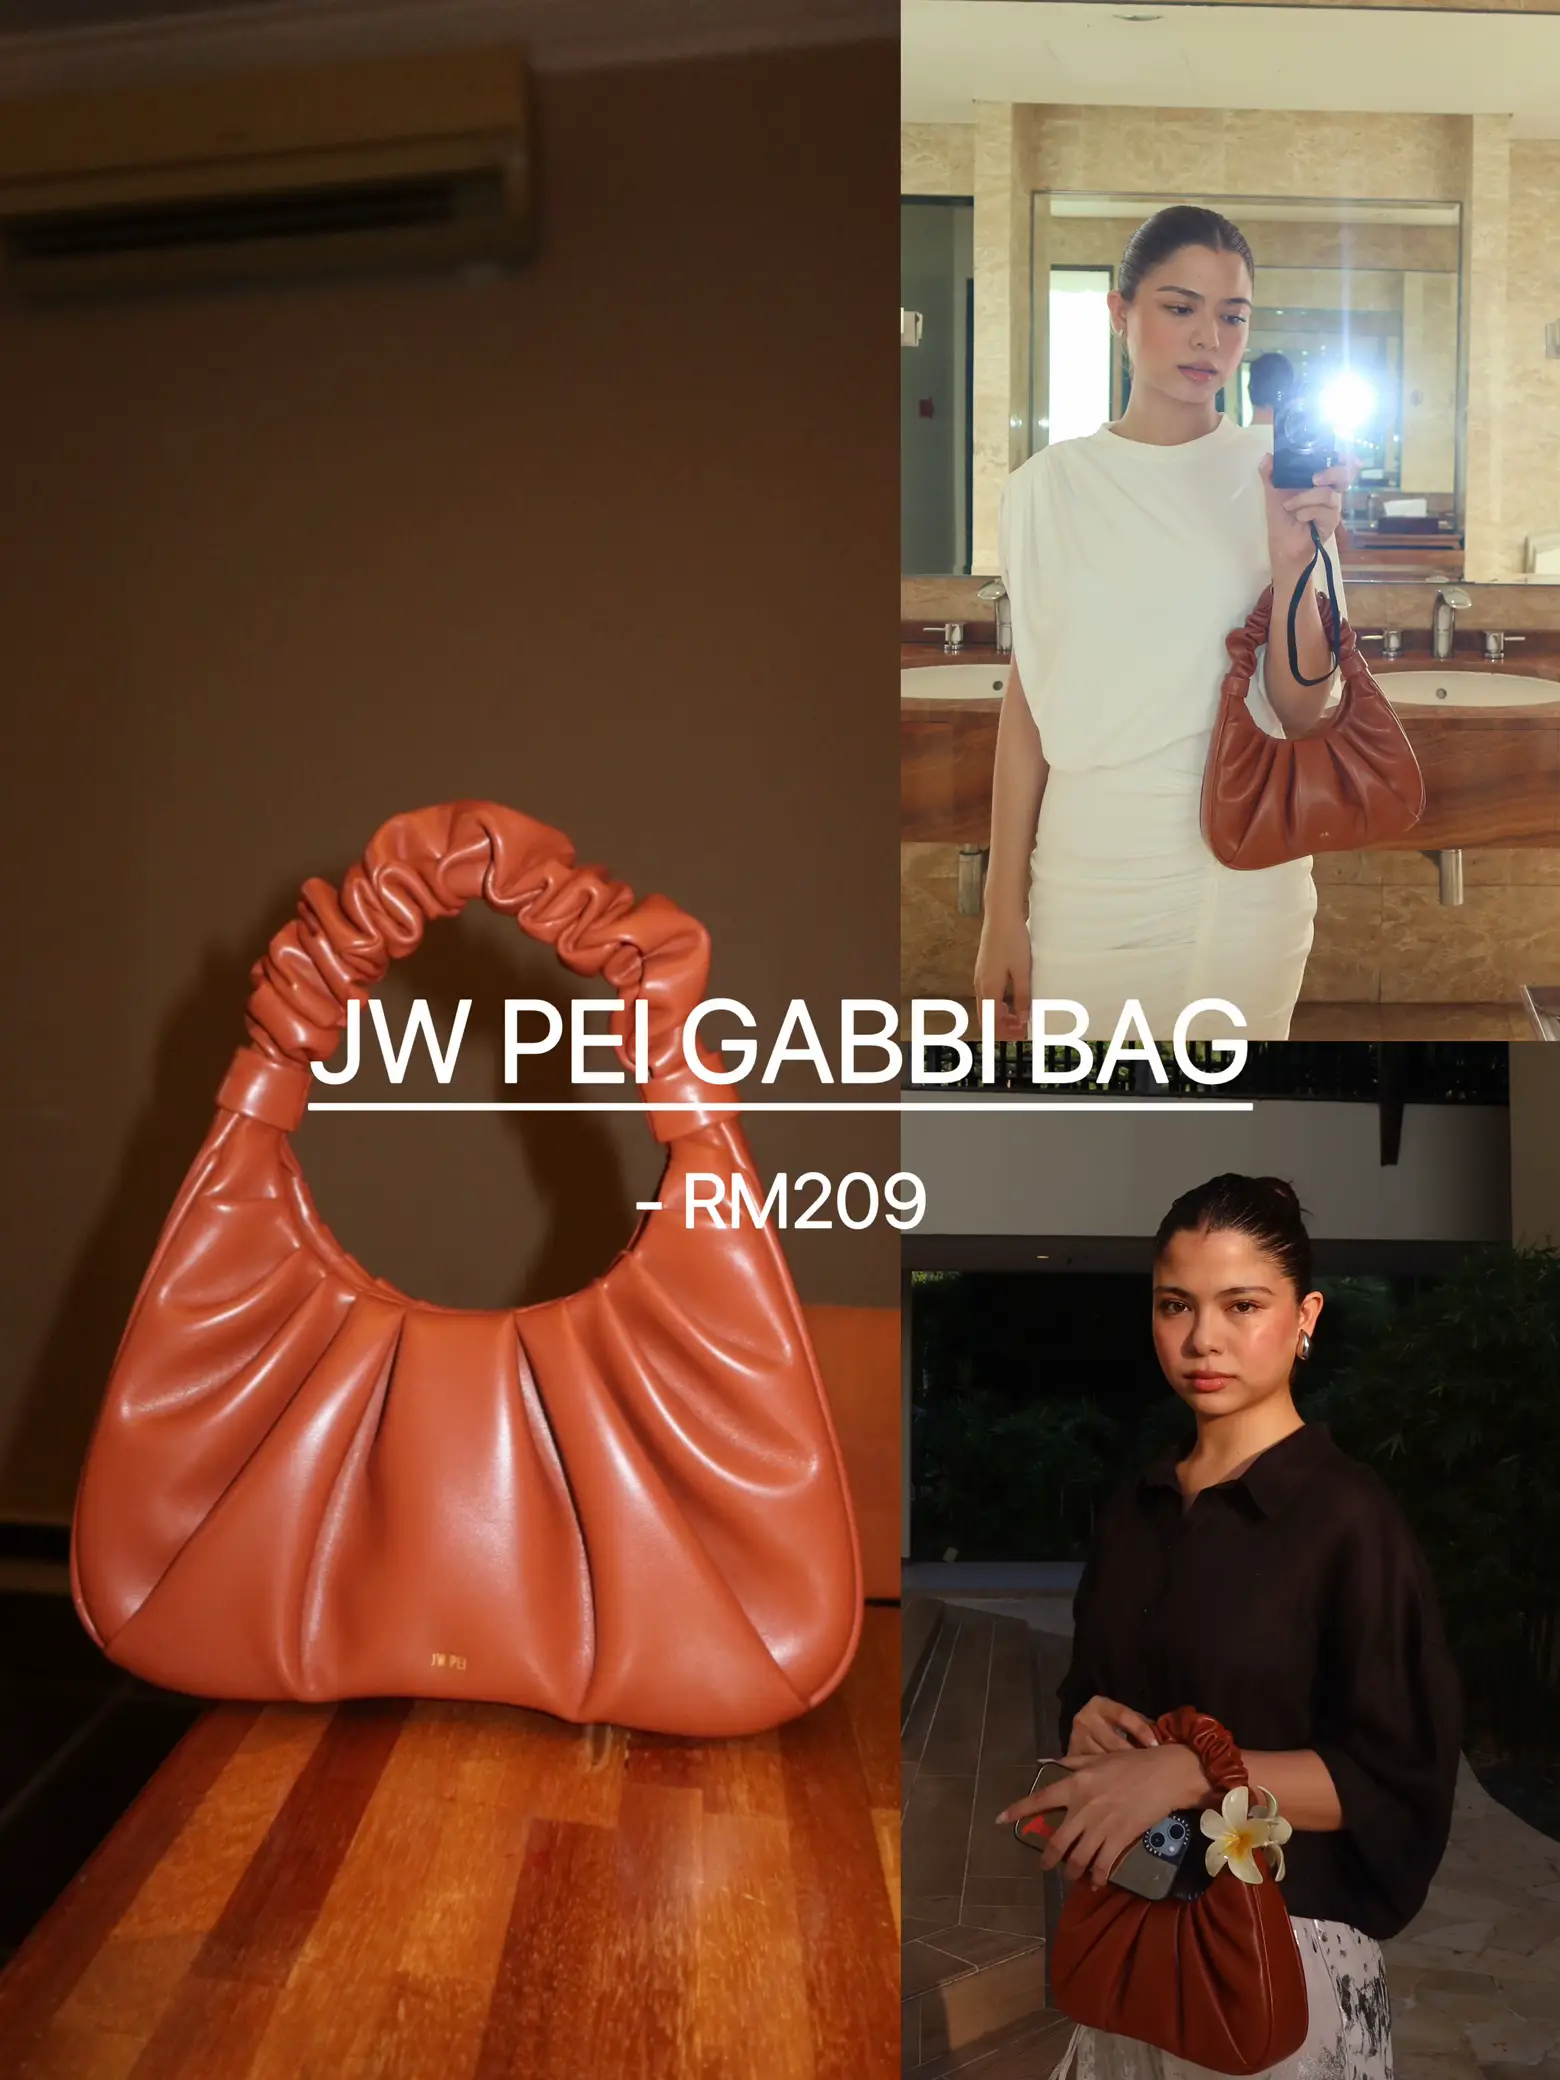 THE IT BAG: JW PEI GABBI BAG, Gallery posted by Faznadia